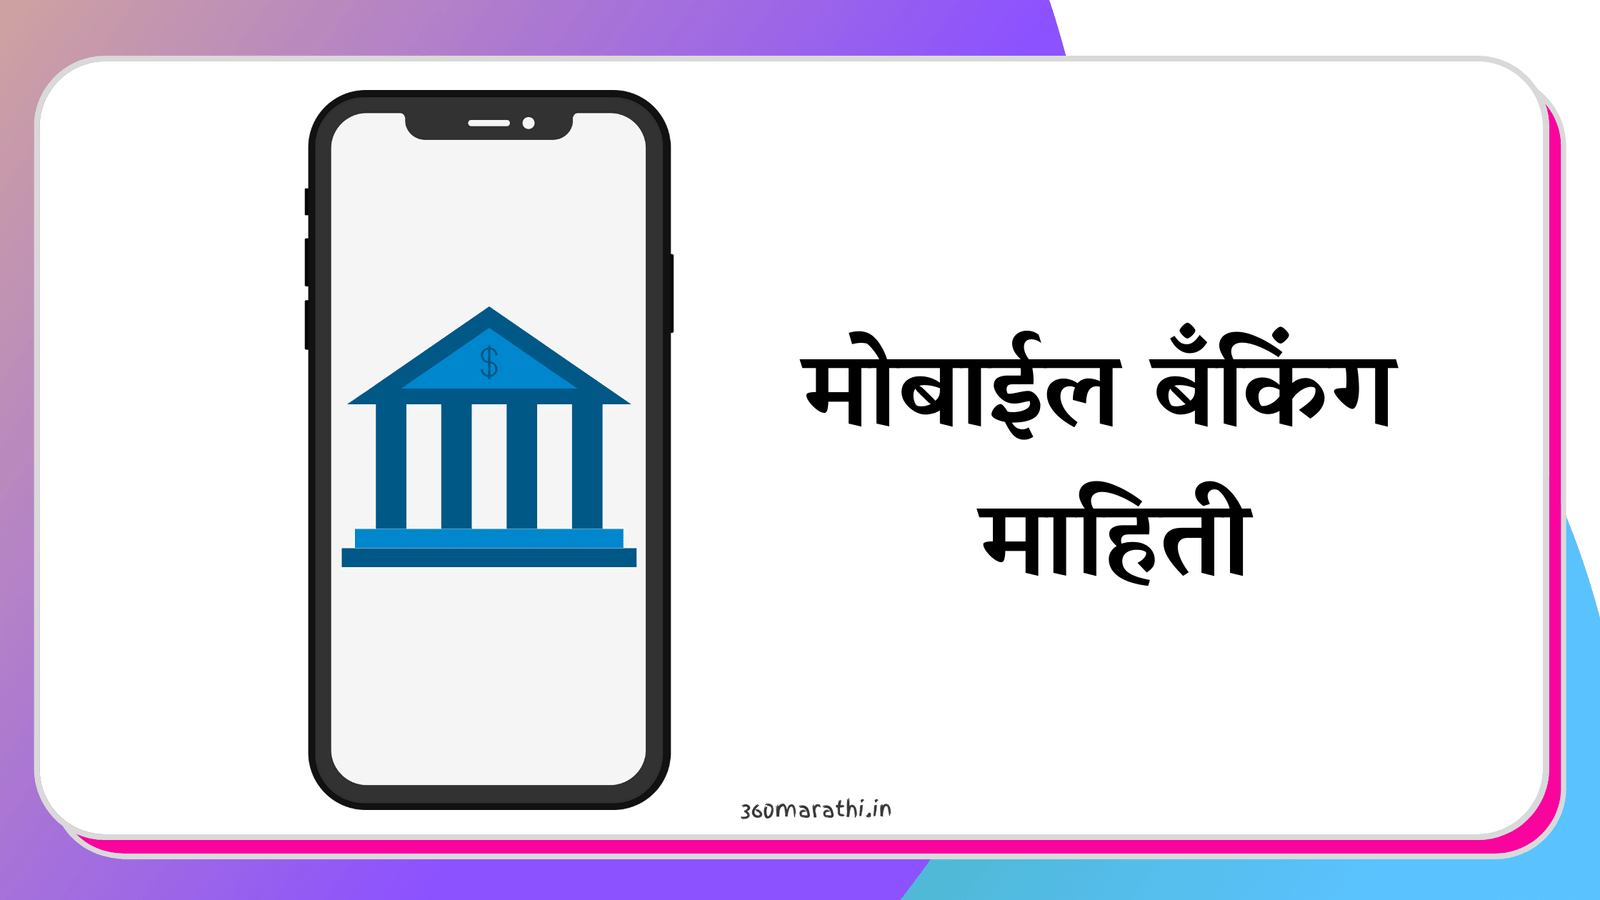 Mobile banking in Marathi